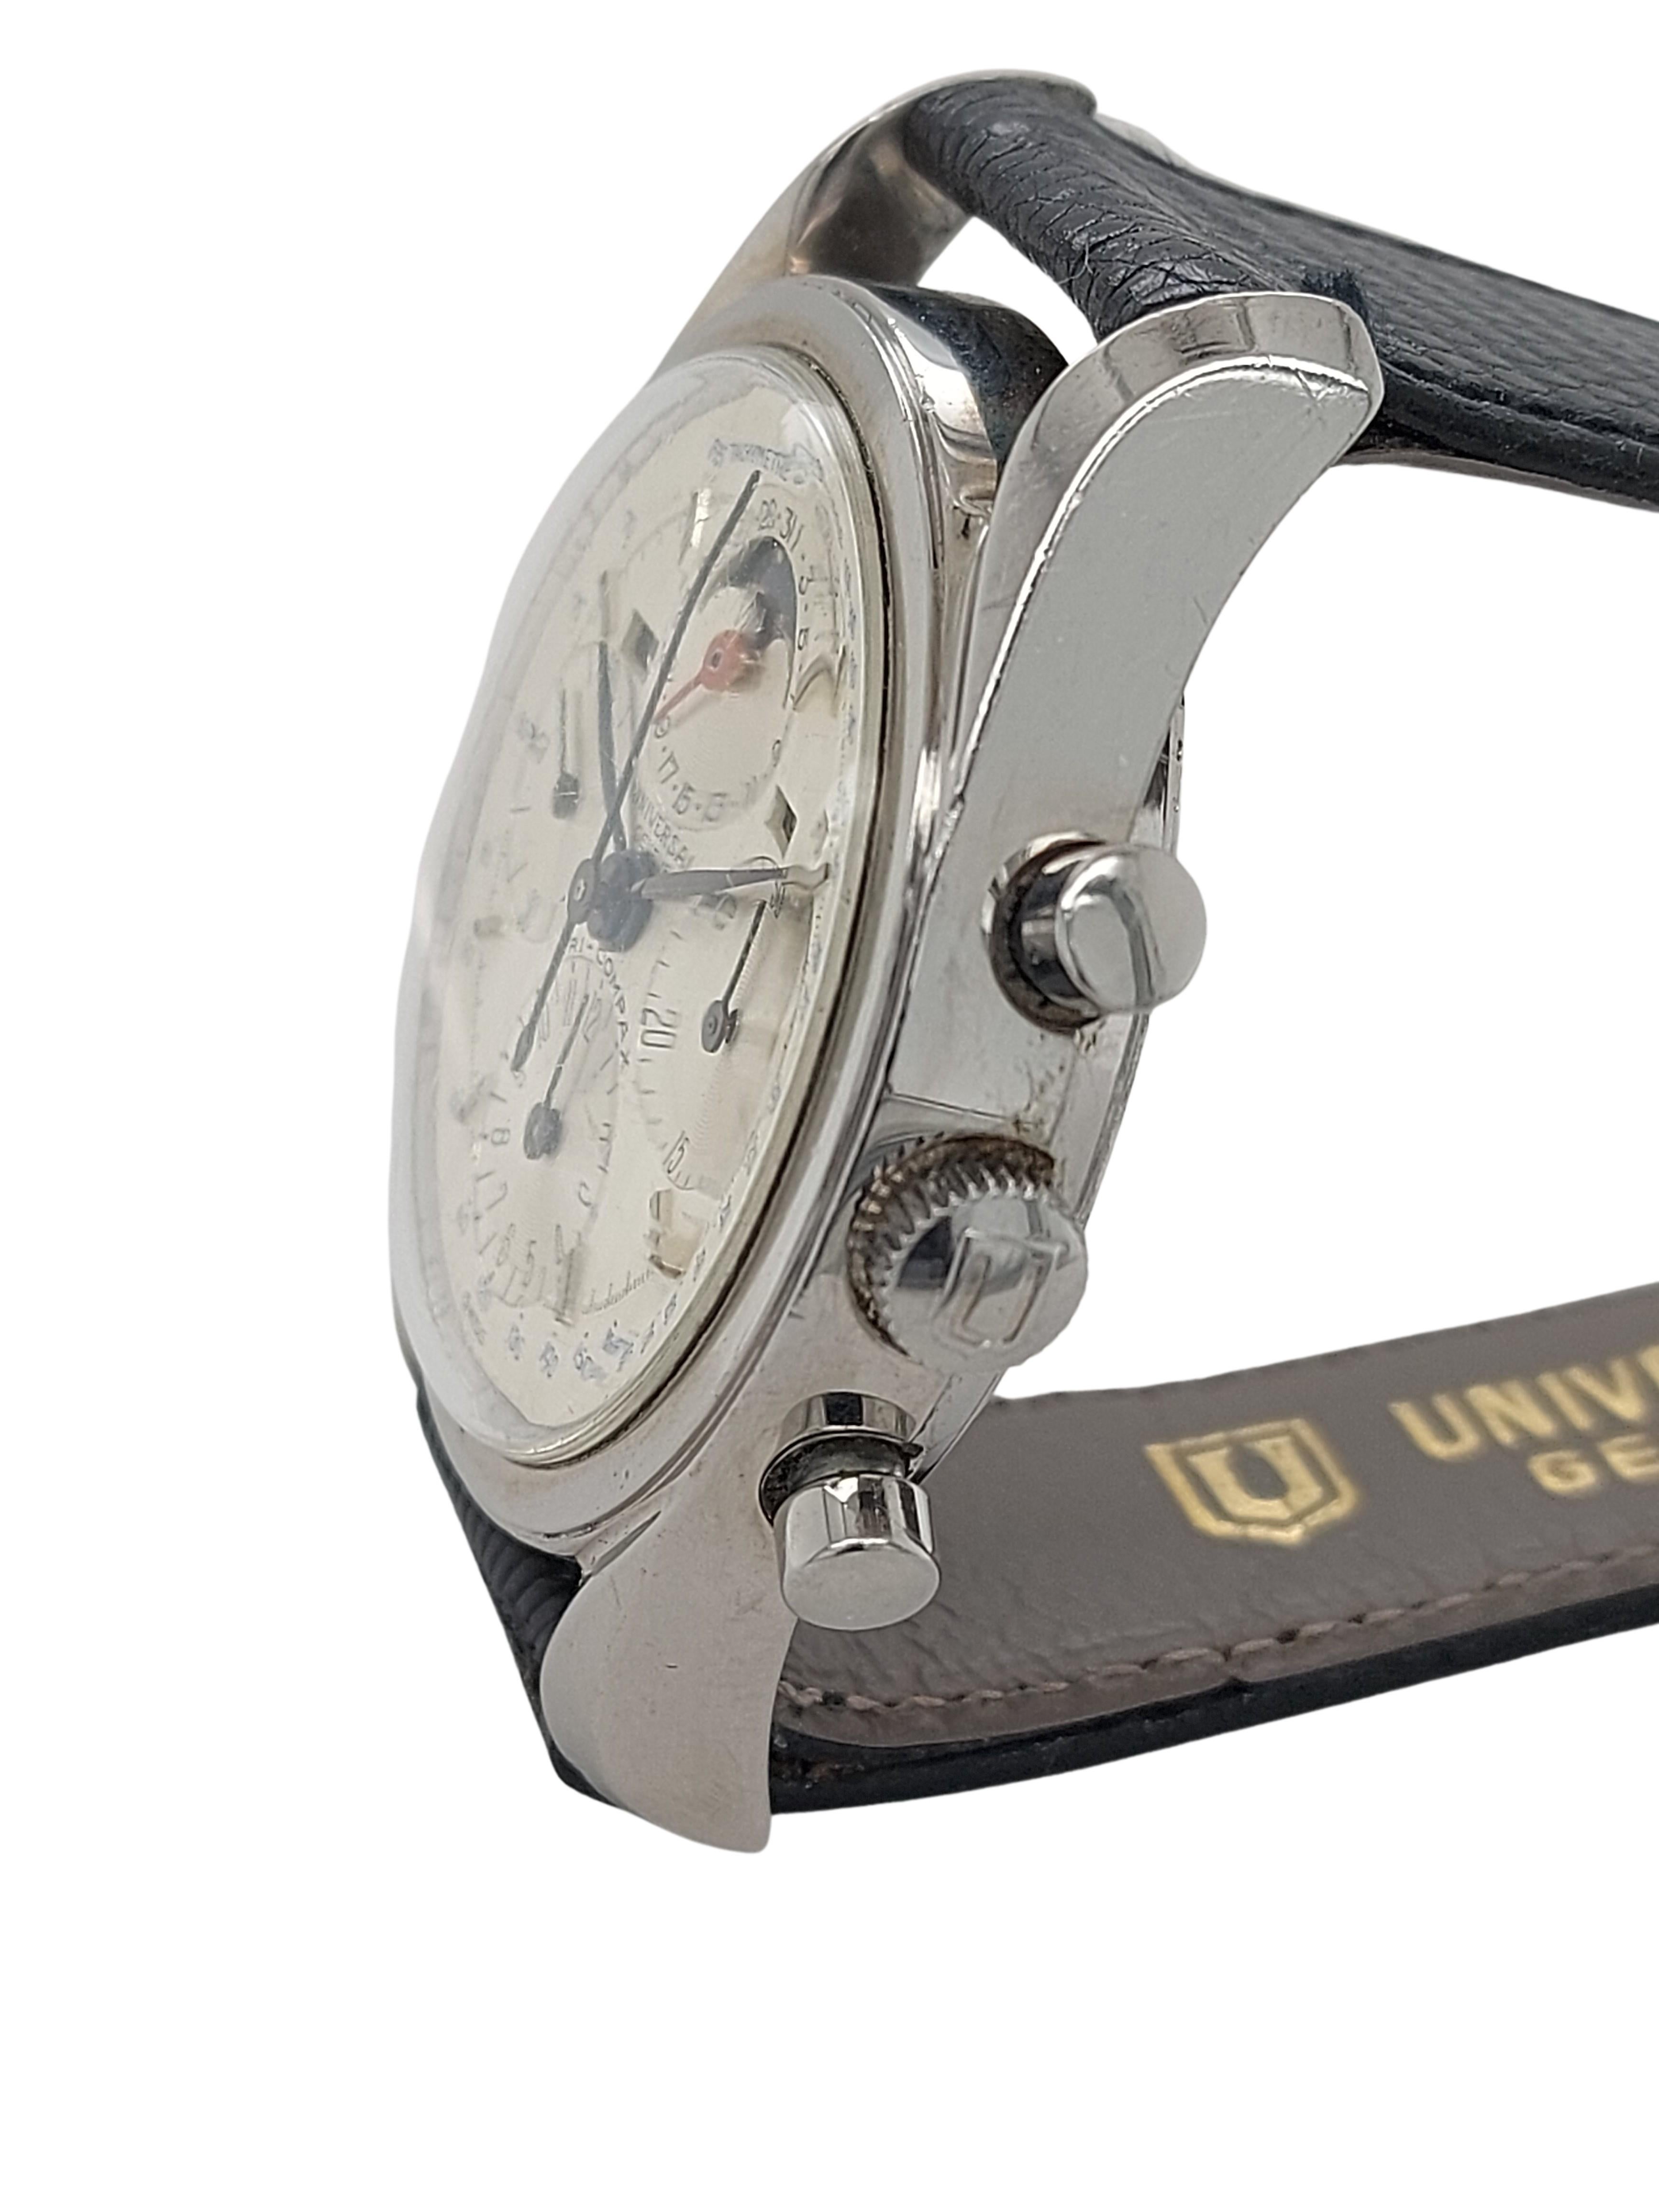 Artisan Universal Genève Tri Compax Chronograph Ref 222100, Rare Collectors Watch For Sale